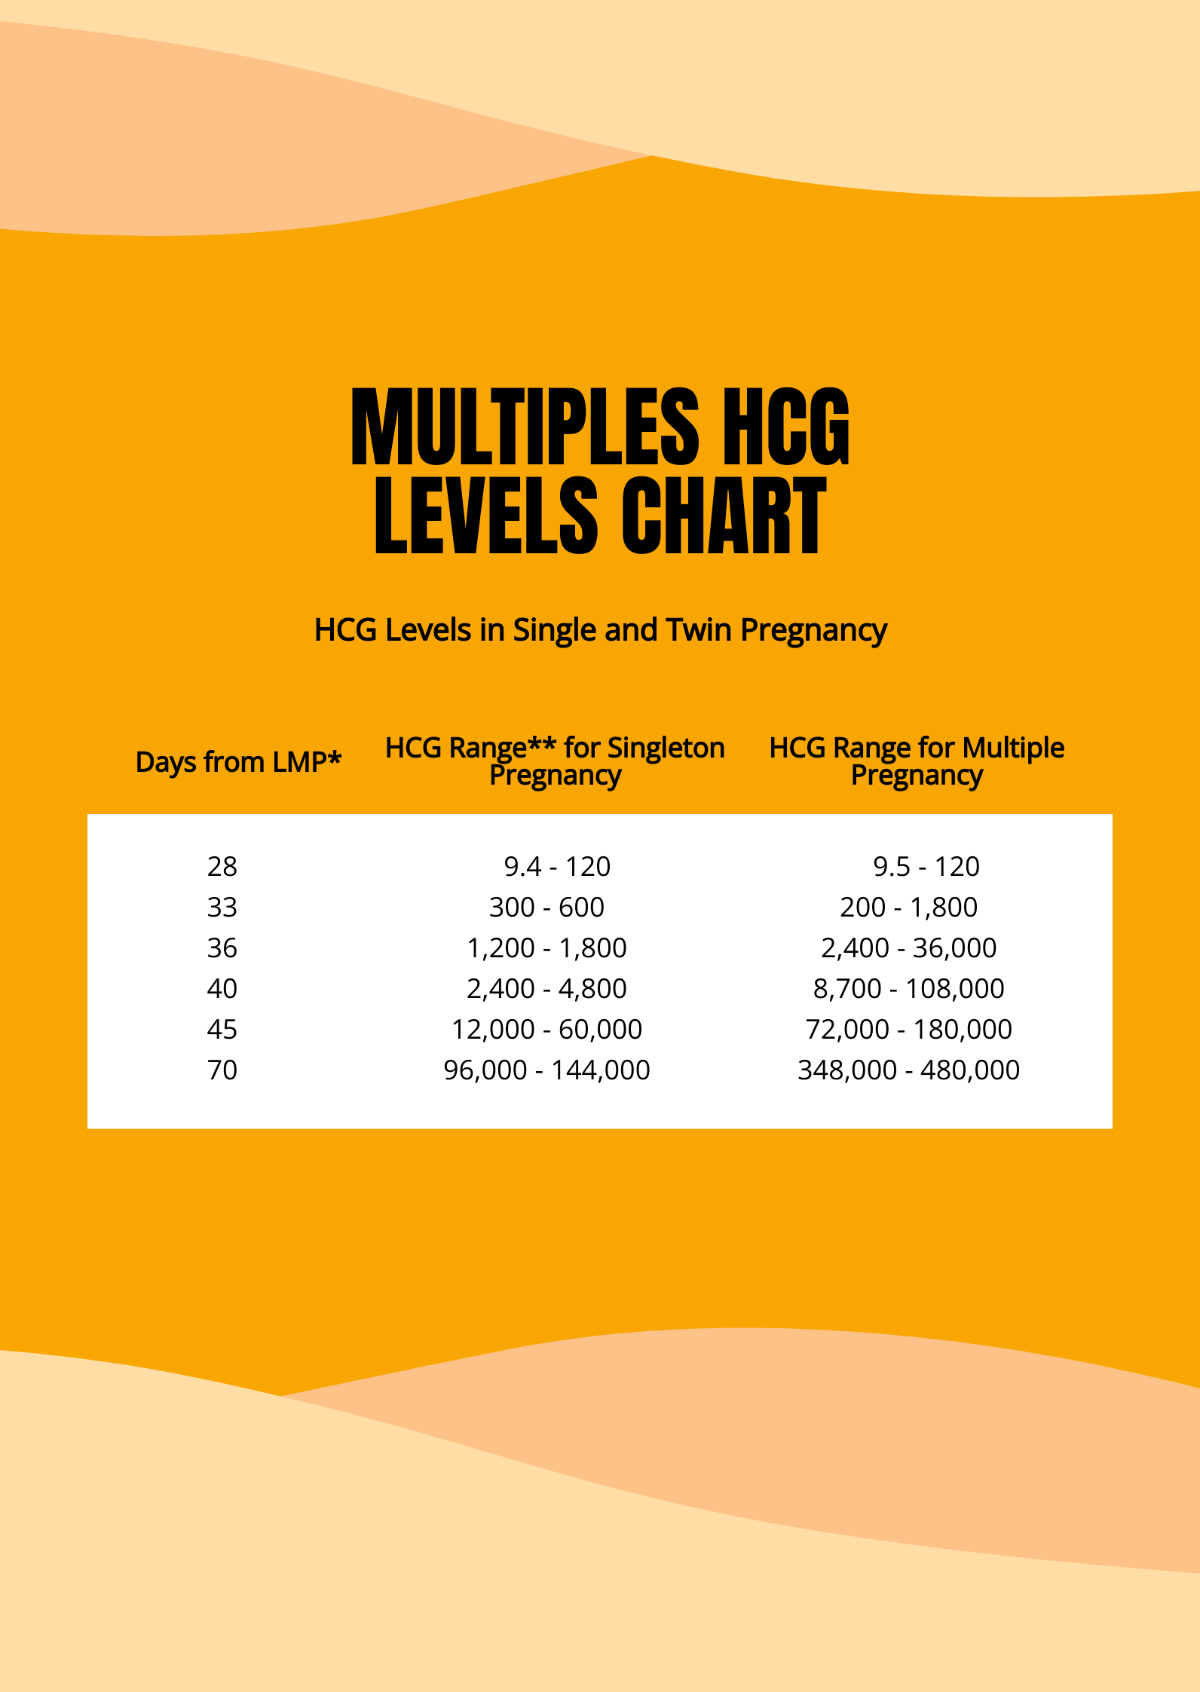 Multiples HCG Levels Chart